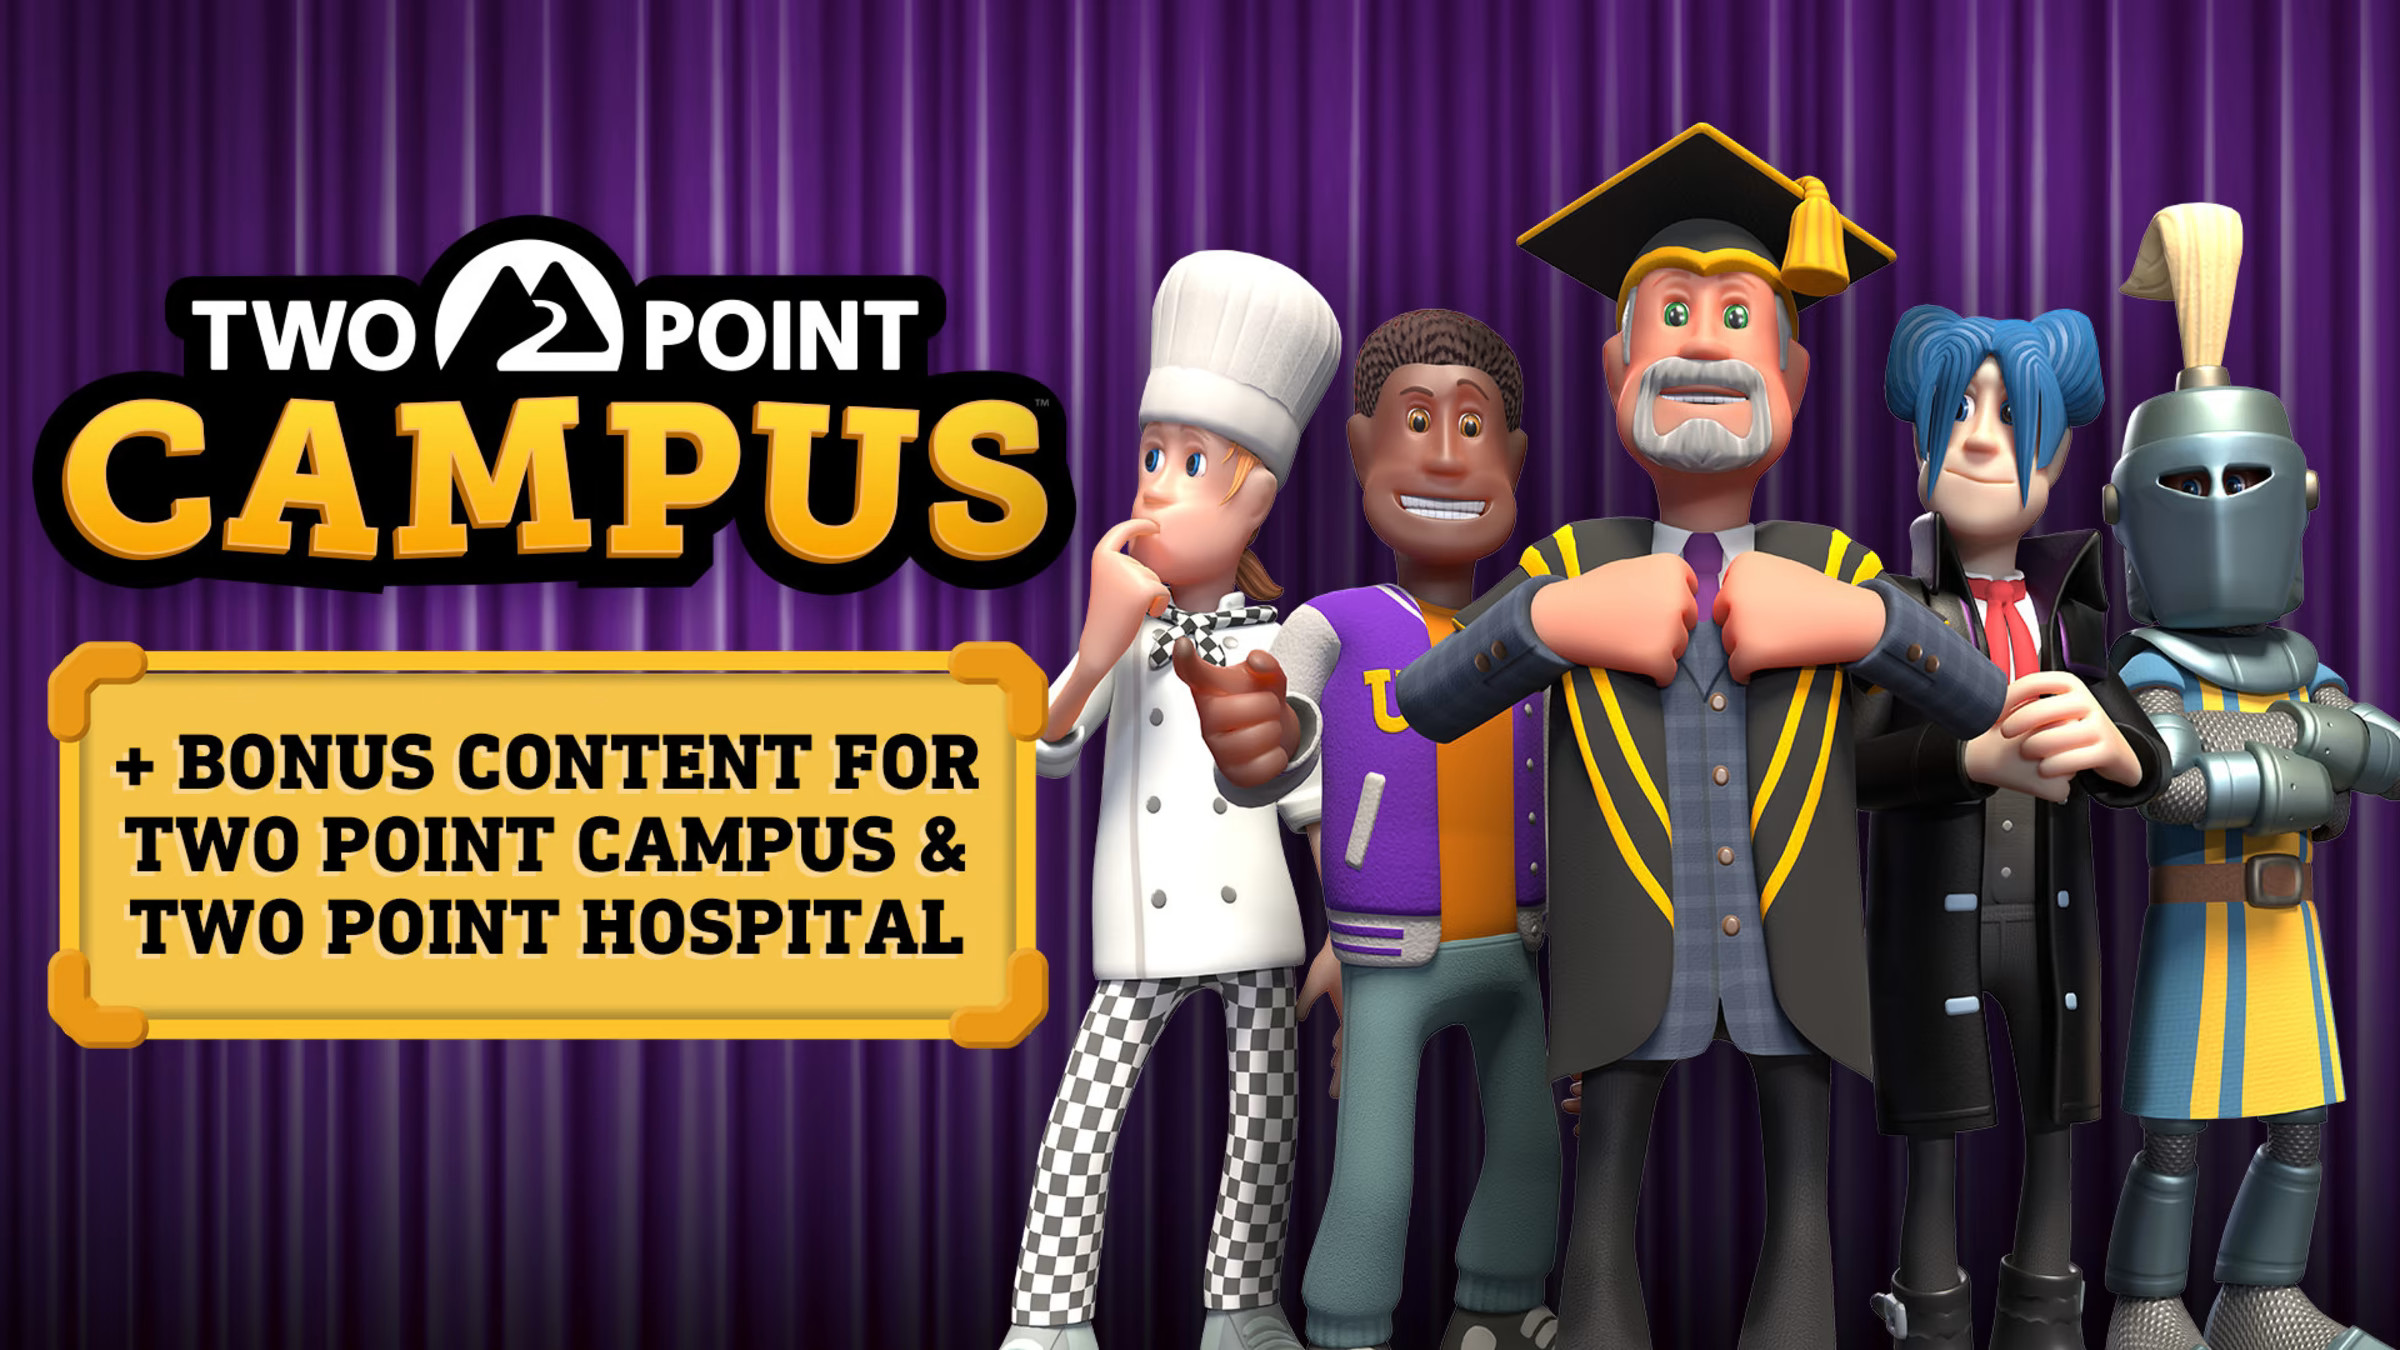 Two Point Campus - Bonus Pack DLC PS4 CD Key